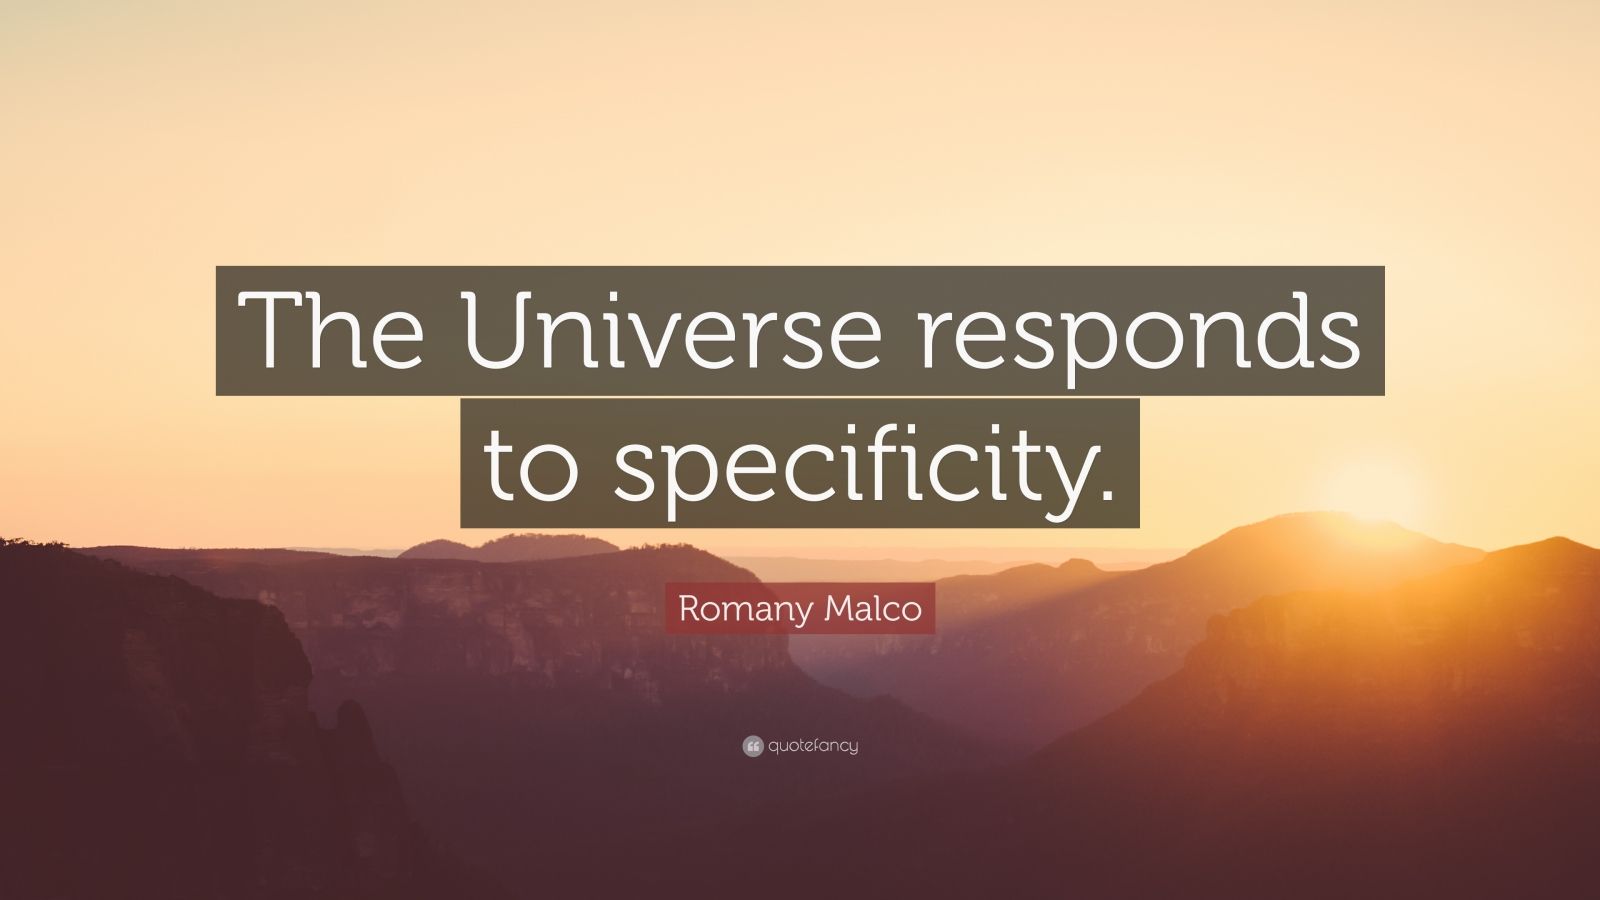 Romany Malco Quote: “The Universe responds to specificity.” (9 ...